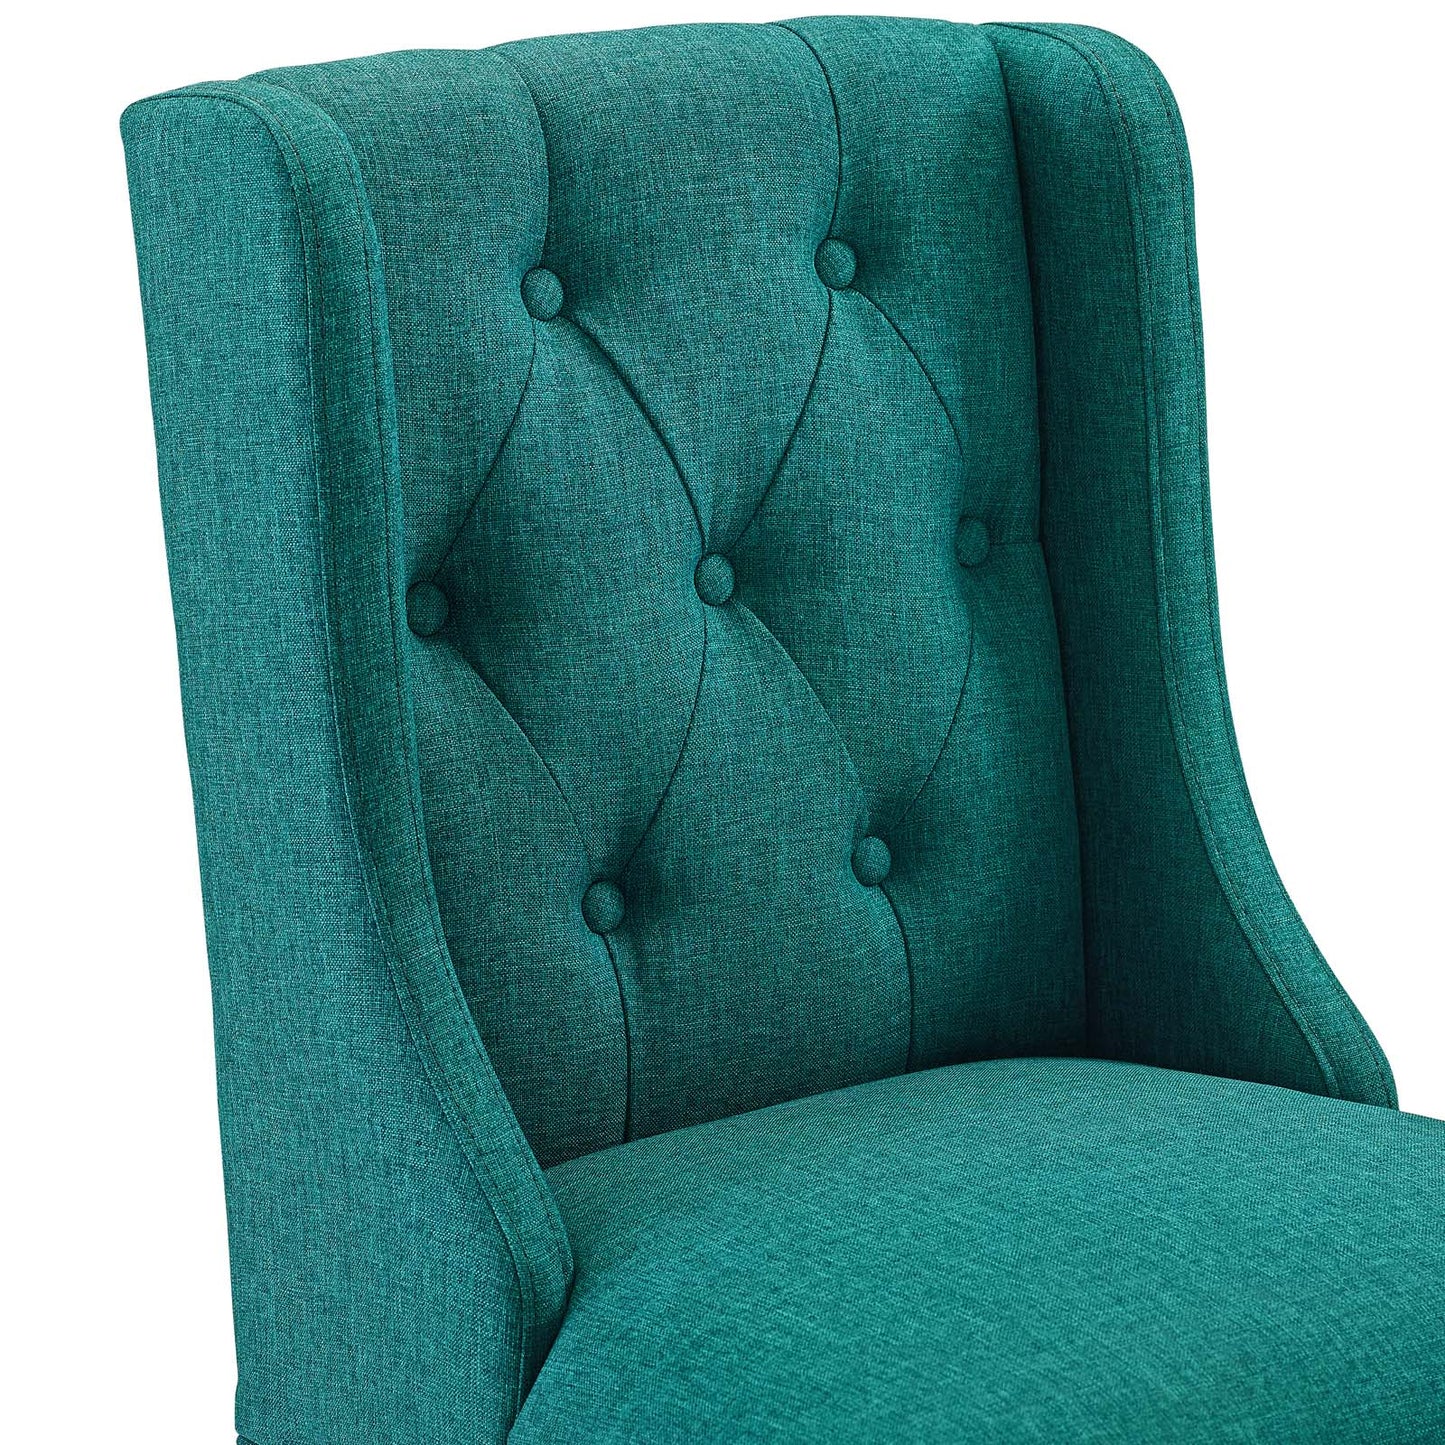 Baronet Bar Stool Upholstered Fabric Set of 2 Teal EEI-4022-TEA